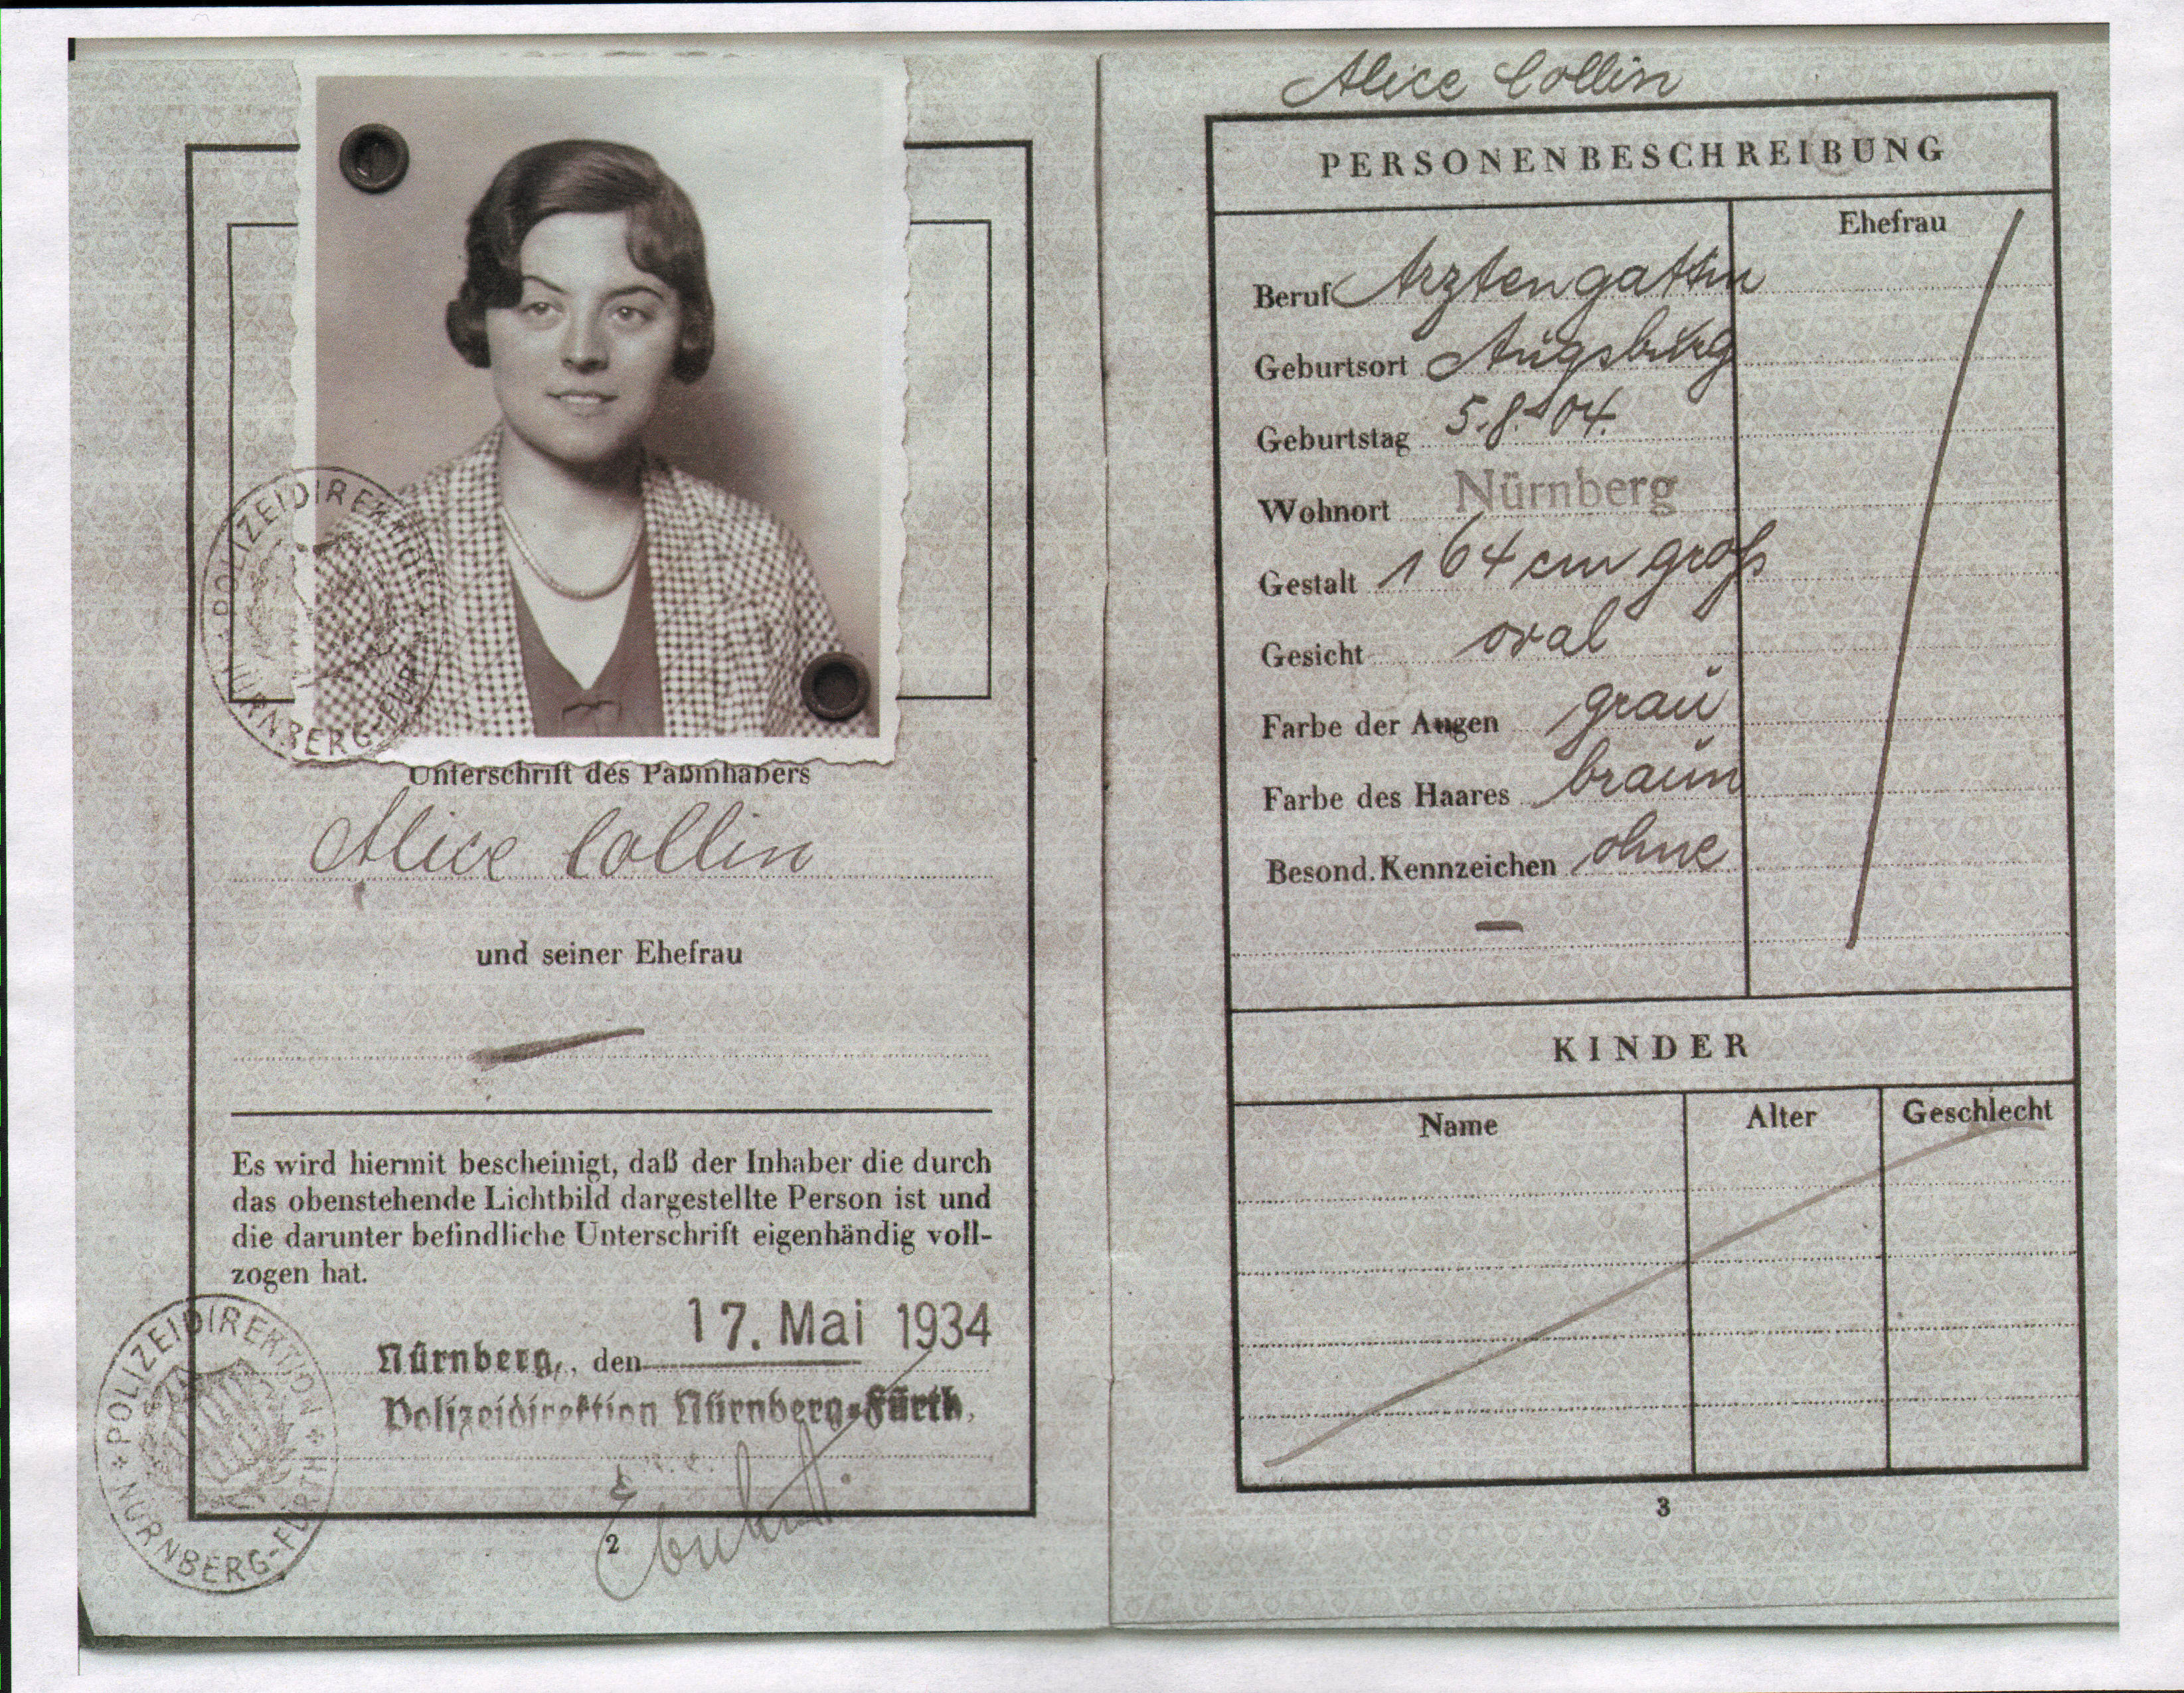 Alice Collin's passport